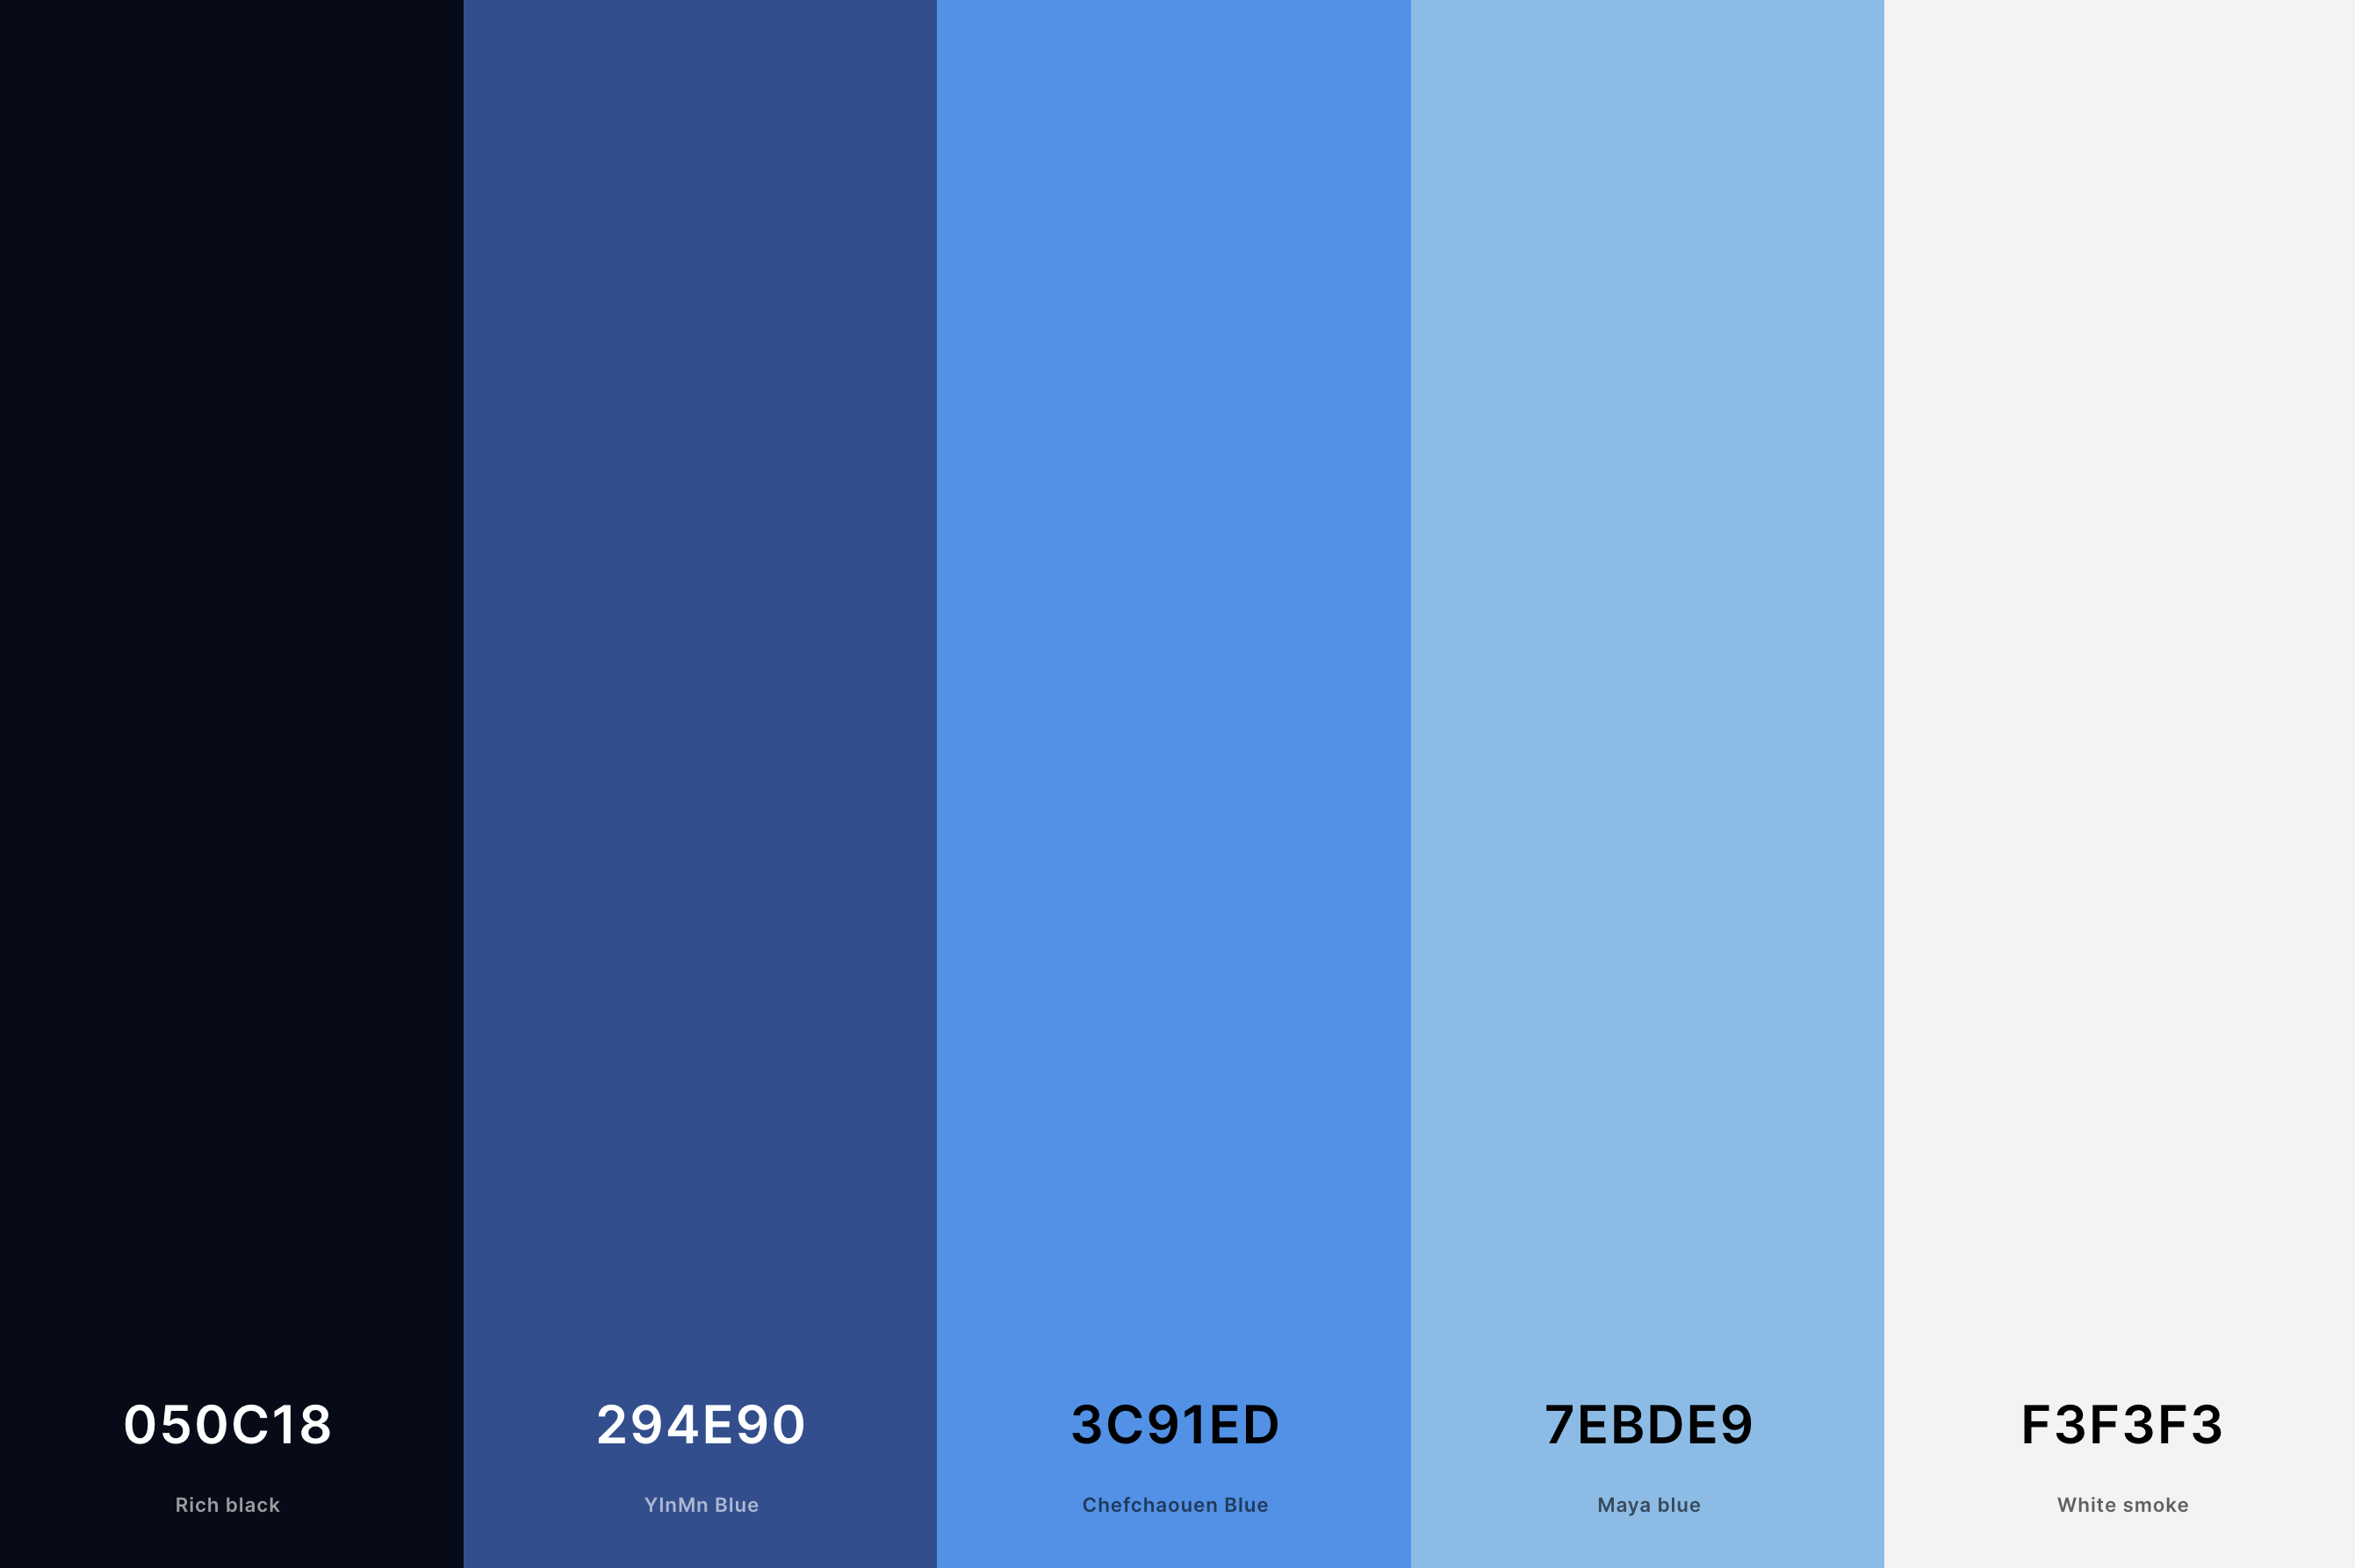 15. Blue, White And Black Color Palette Color Palette with Rich Black (Hex #050C18) + Yinmn Blue (Hex #294E90) + Chefchaouen Blue (Hex #3C91ED) + Maya Blue (Hex #7EBDE9) + White Smoke (Hex #F3F3F3) Color Palette with Hex Codes